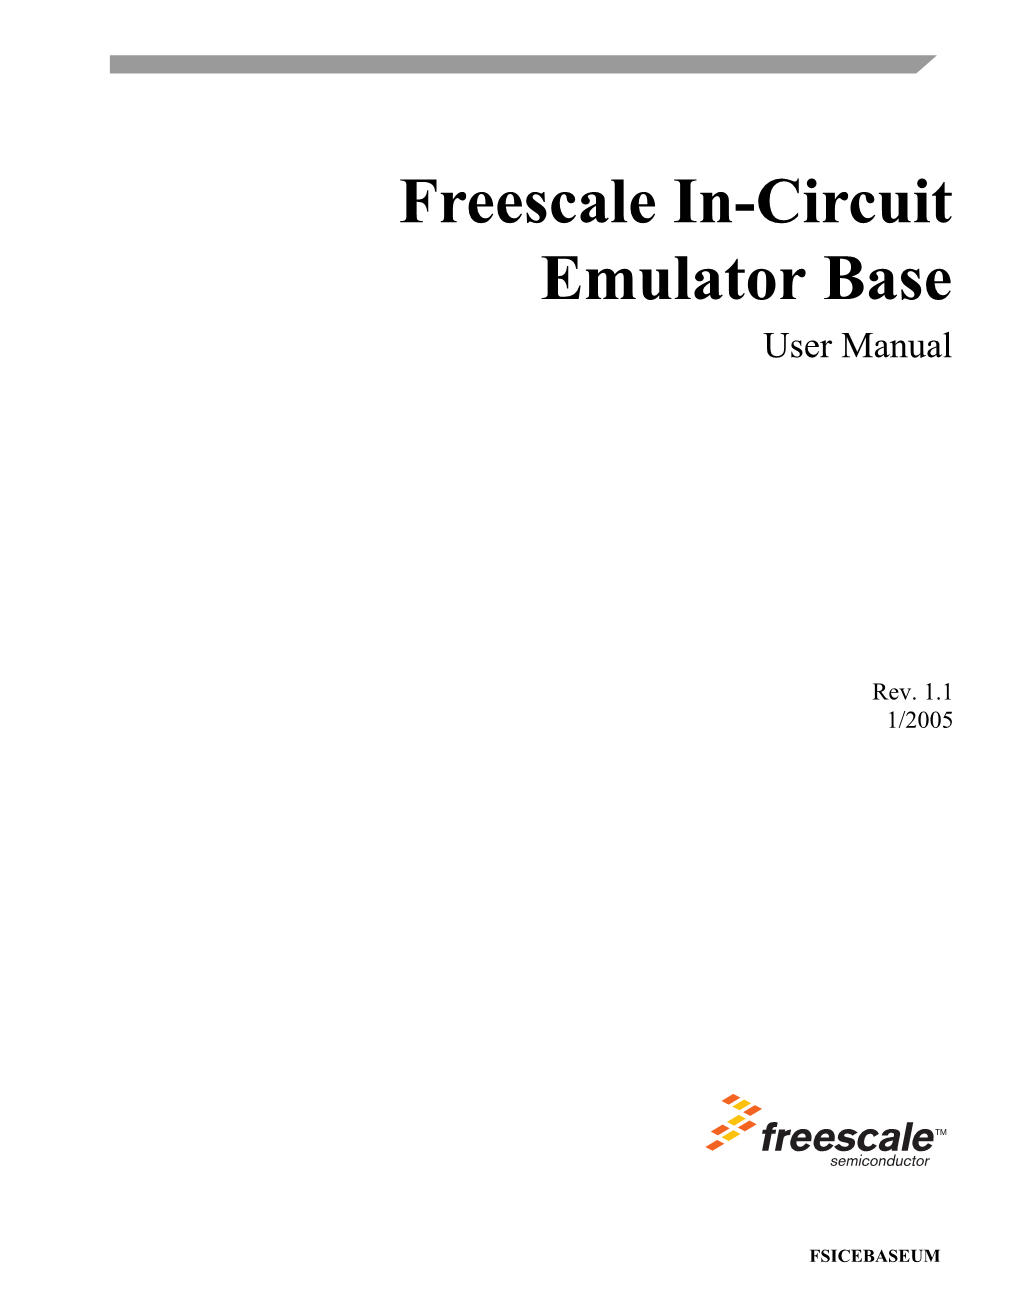 Freescale In-Circuit Emulator Base User Manual